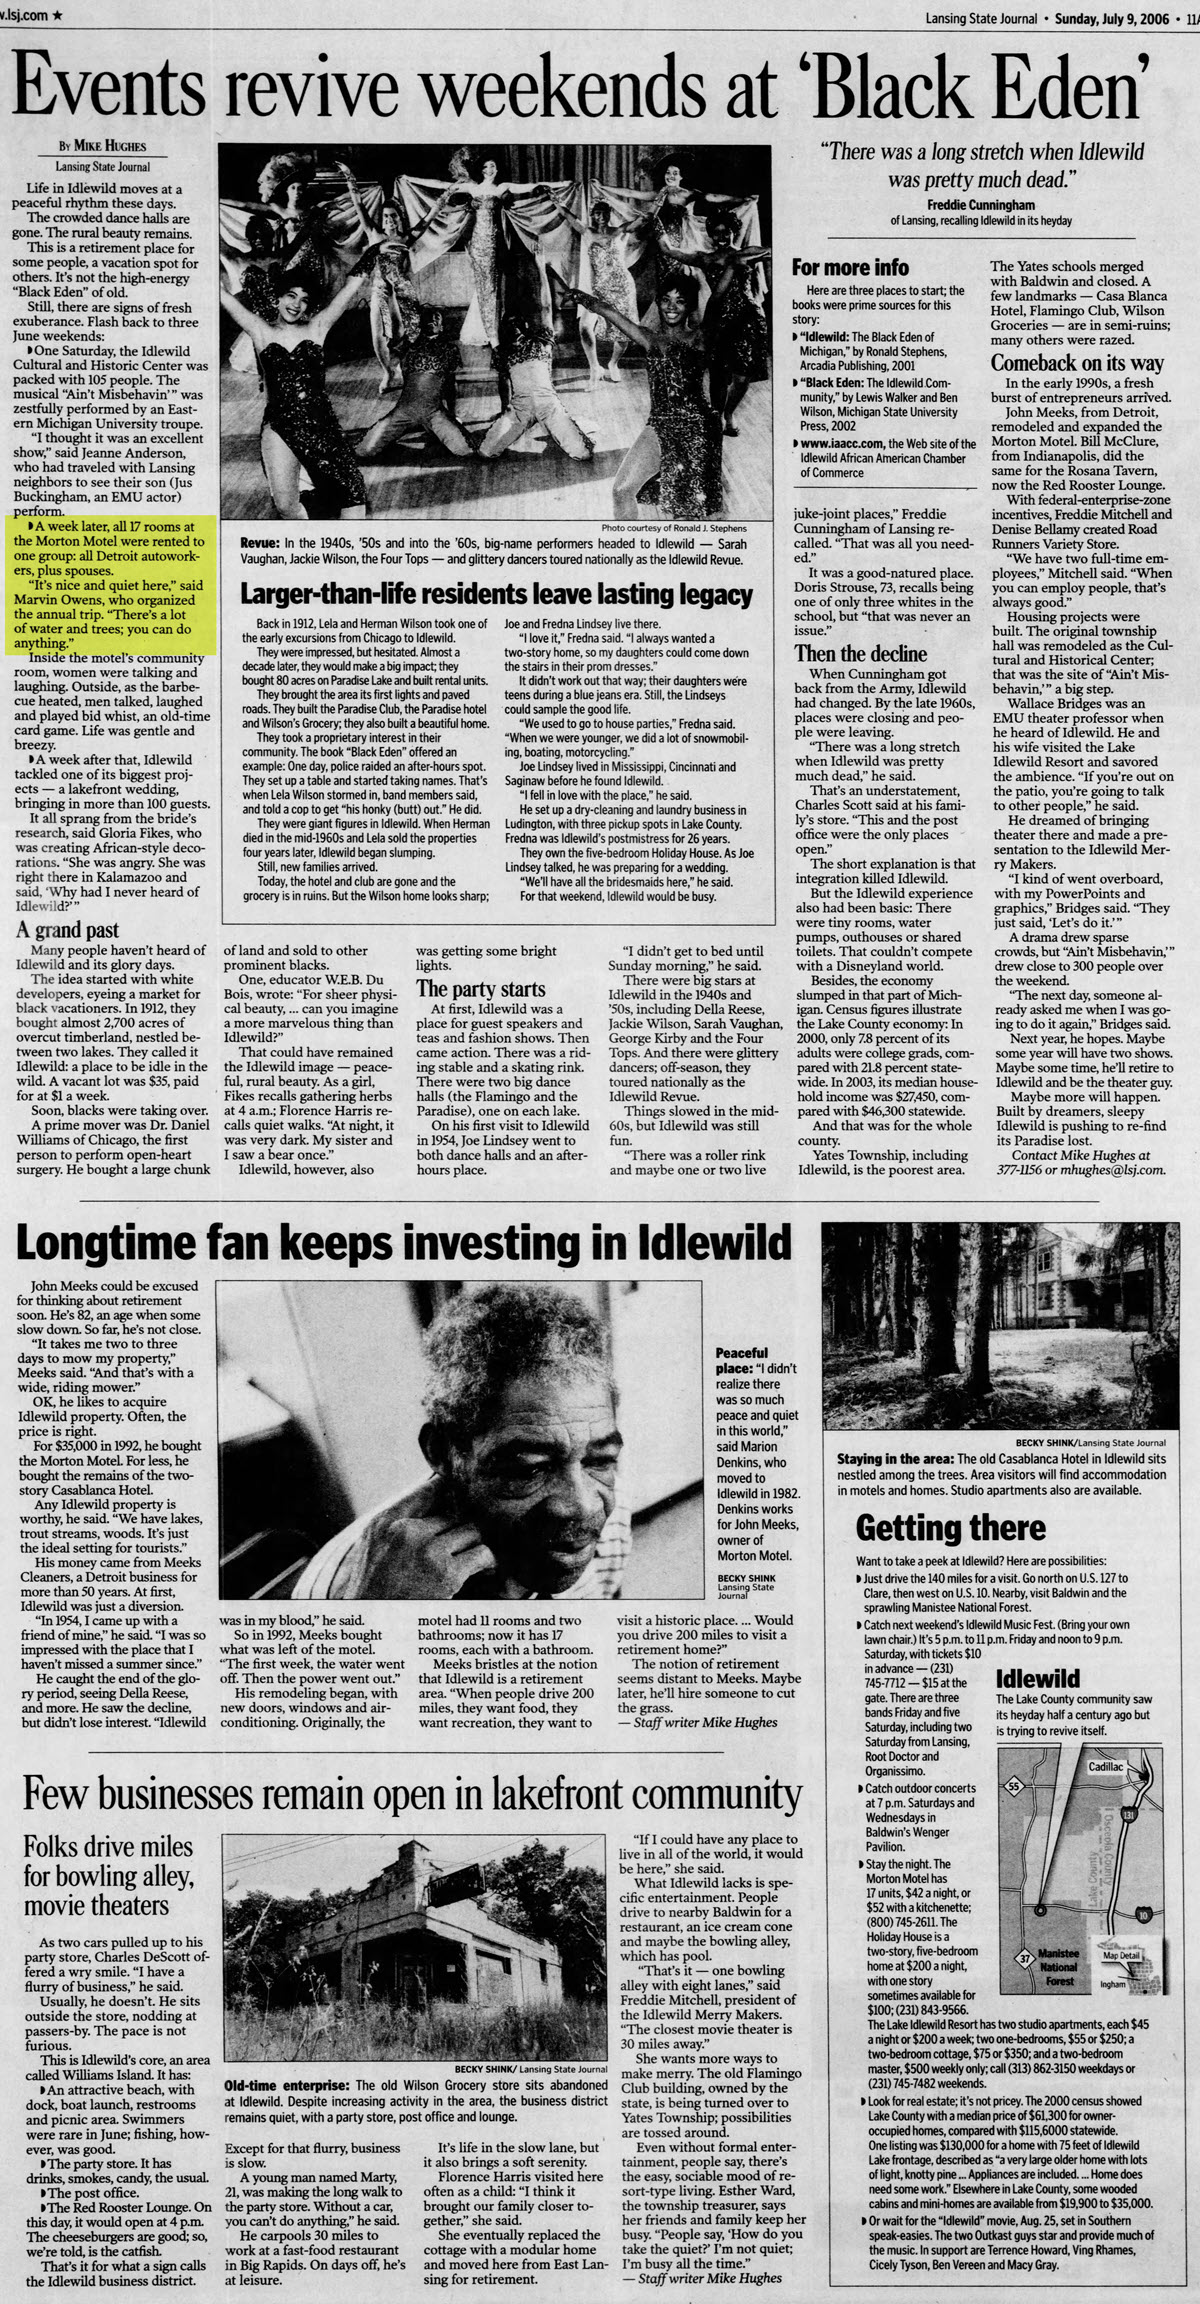 Mortons Motel - Jul 9 2006 Article